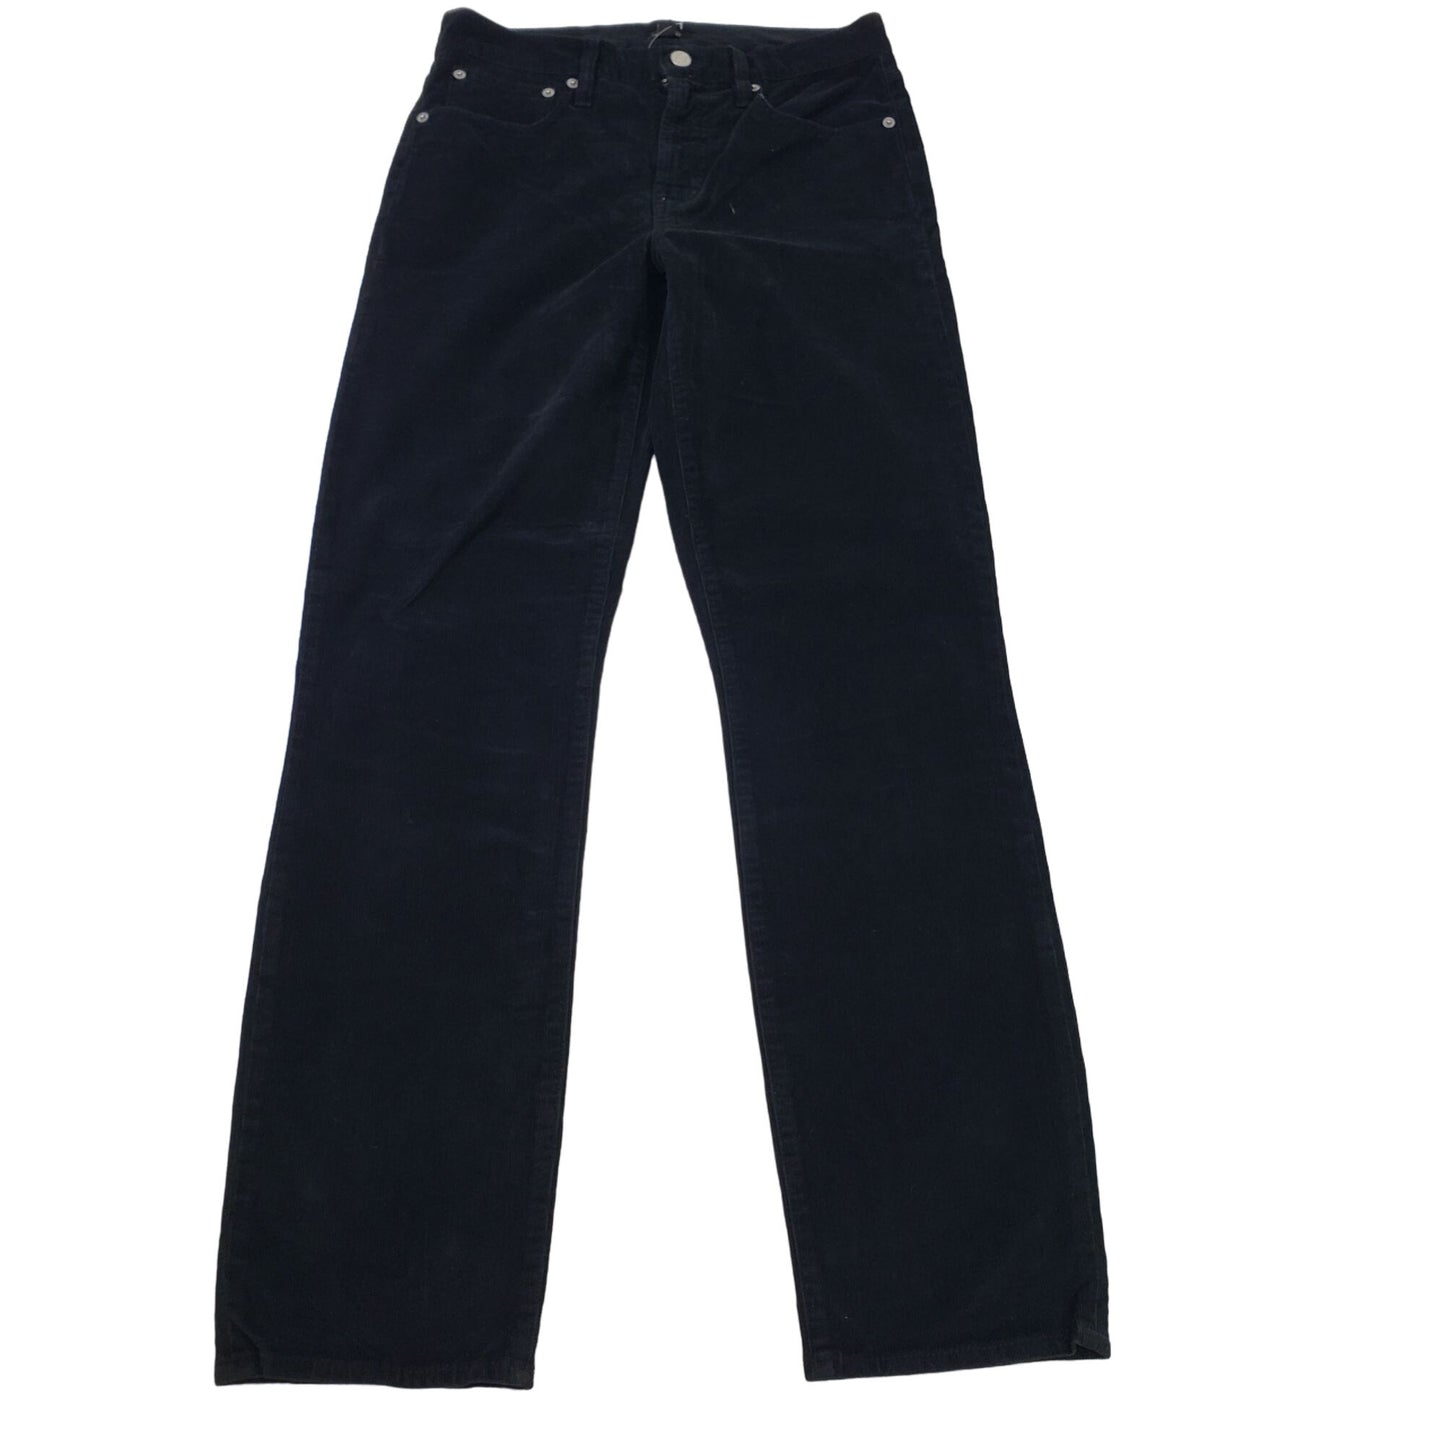 NWT J. Crew Vintage Straight Corduroy Pants Size 28 Tall